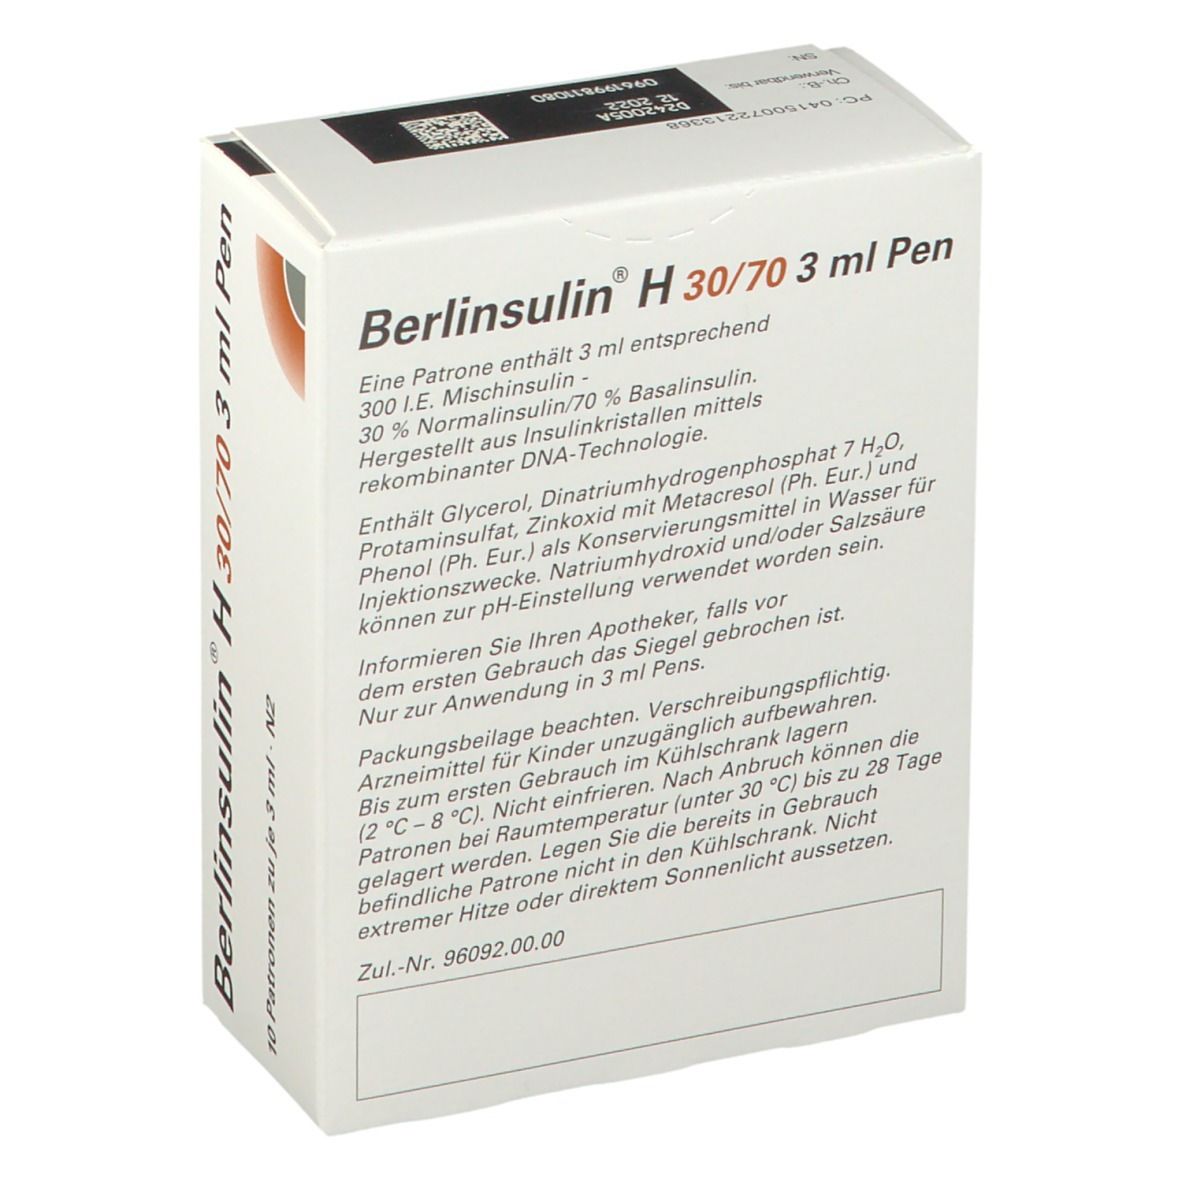 Berlinsulin® H 30/70